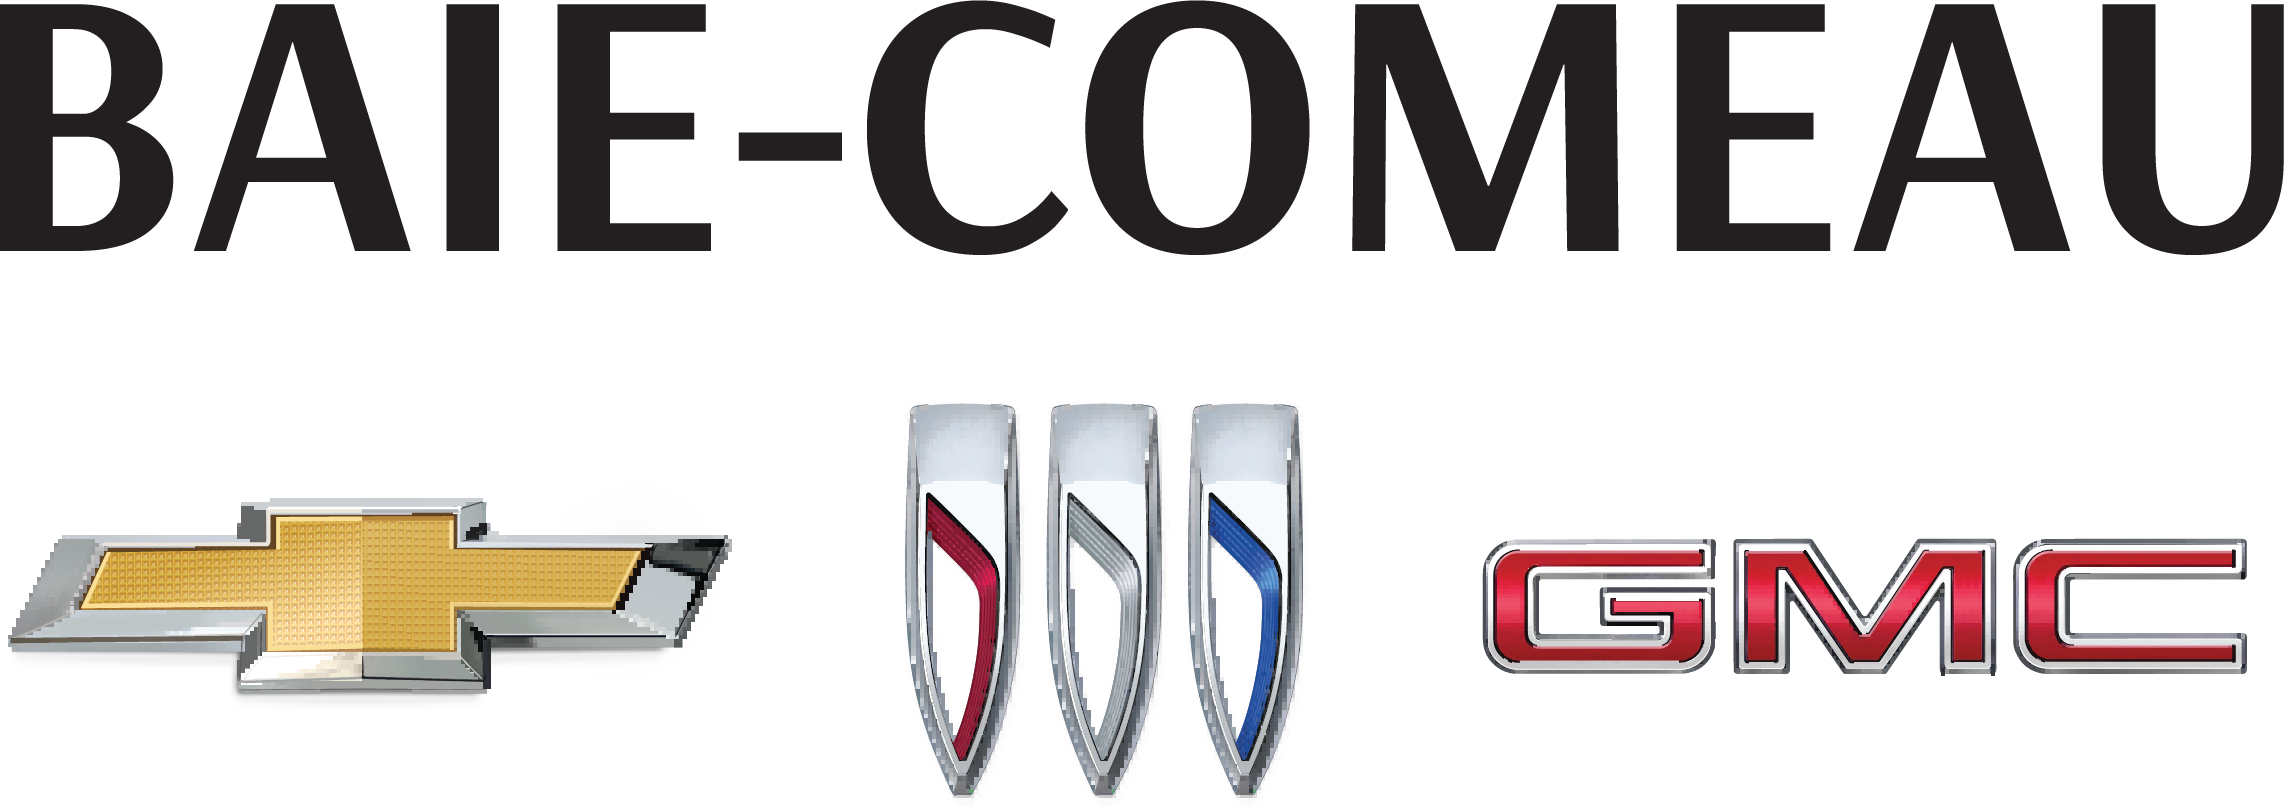 Logo de Baie Comeau Chevrolet Buick GMC